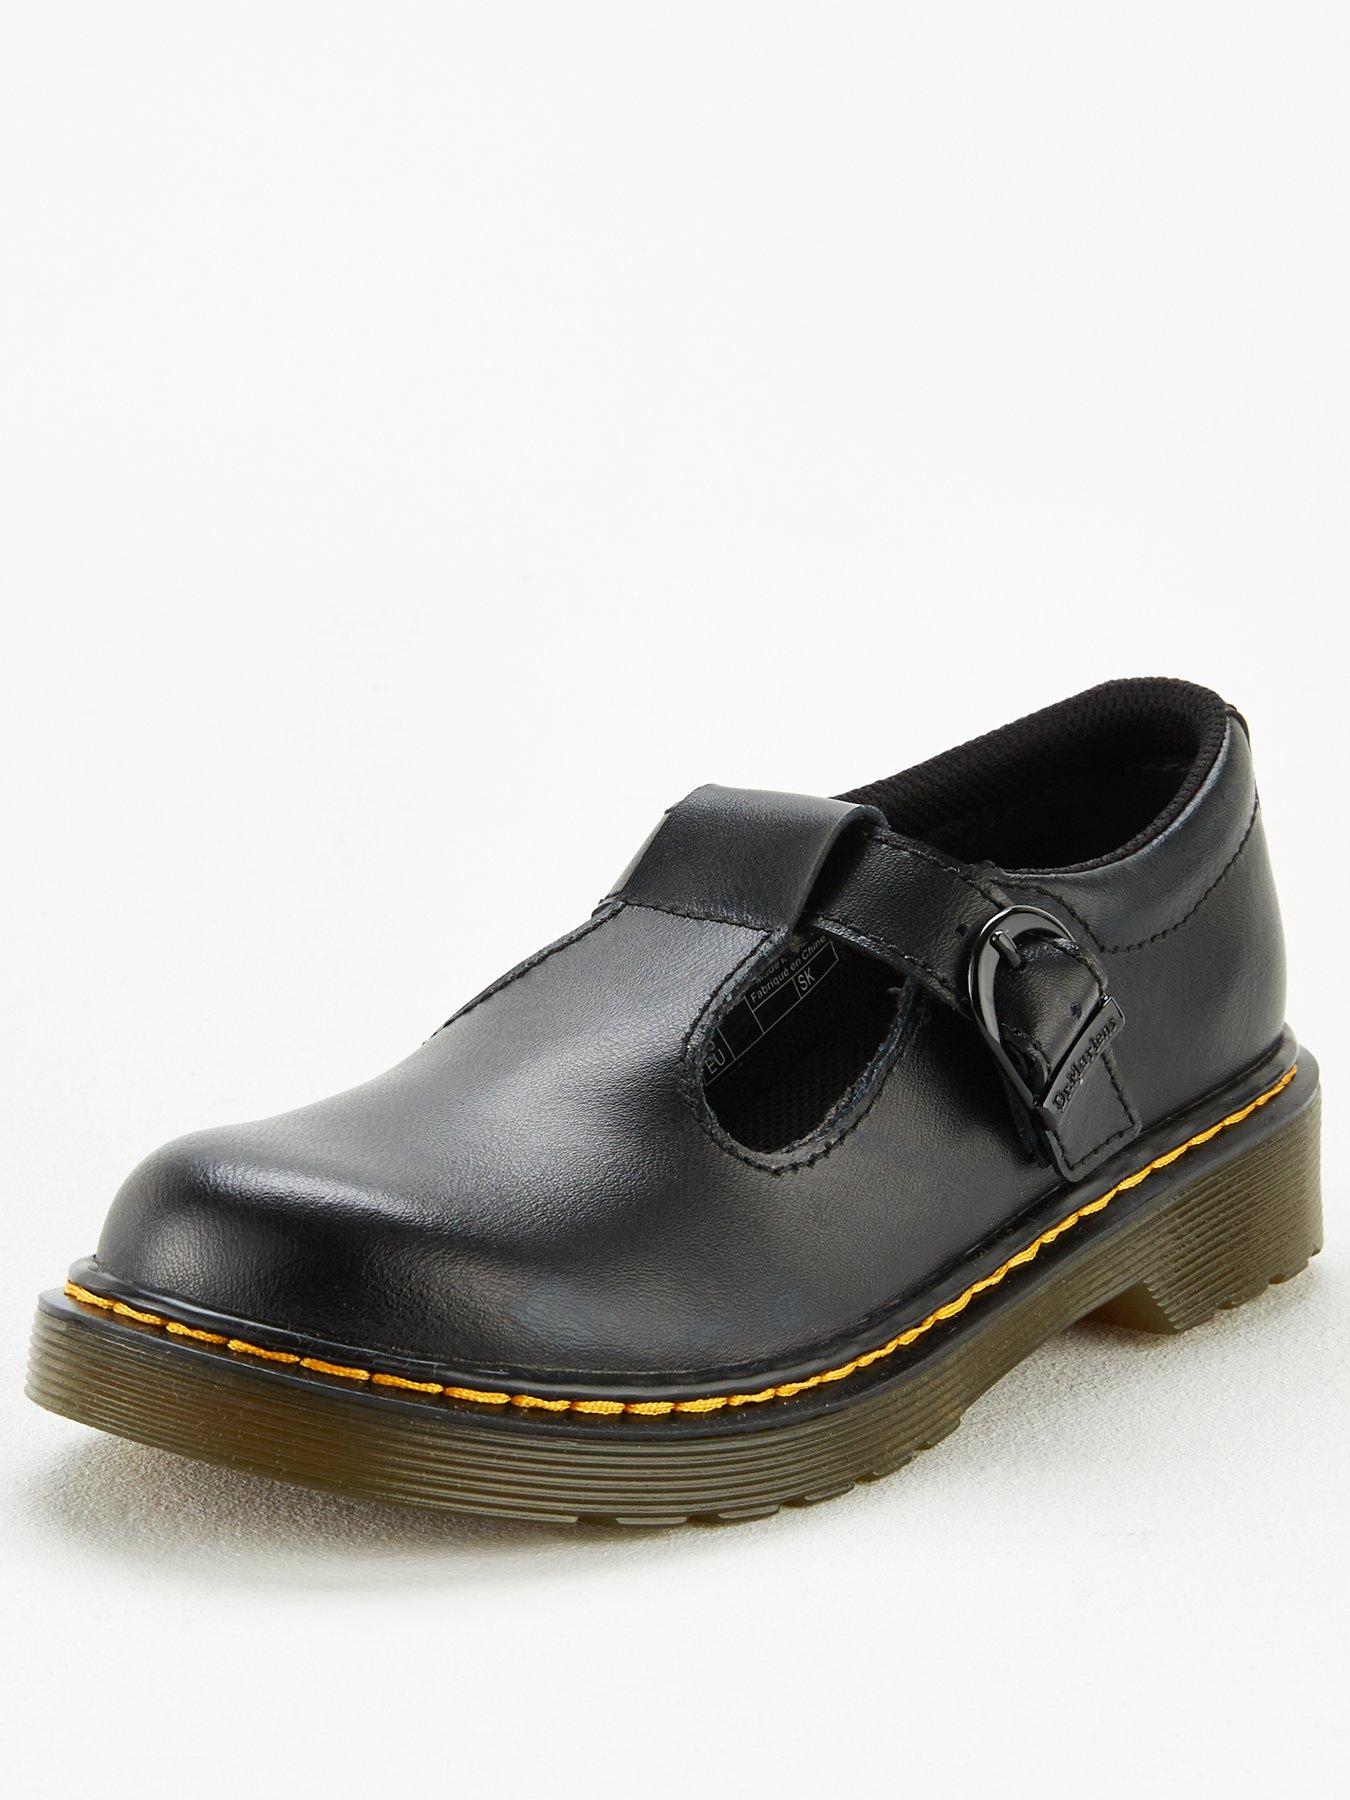 Dr Martens School Boots Online Sale, UP 